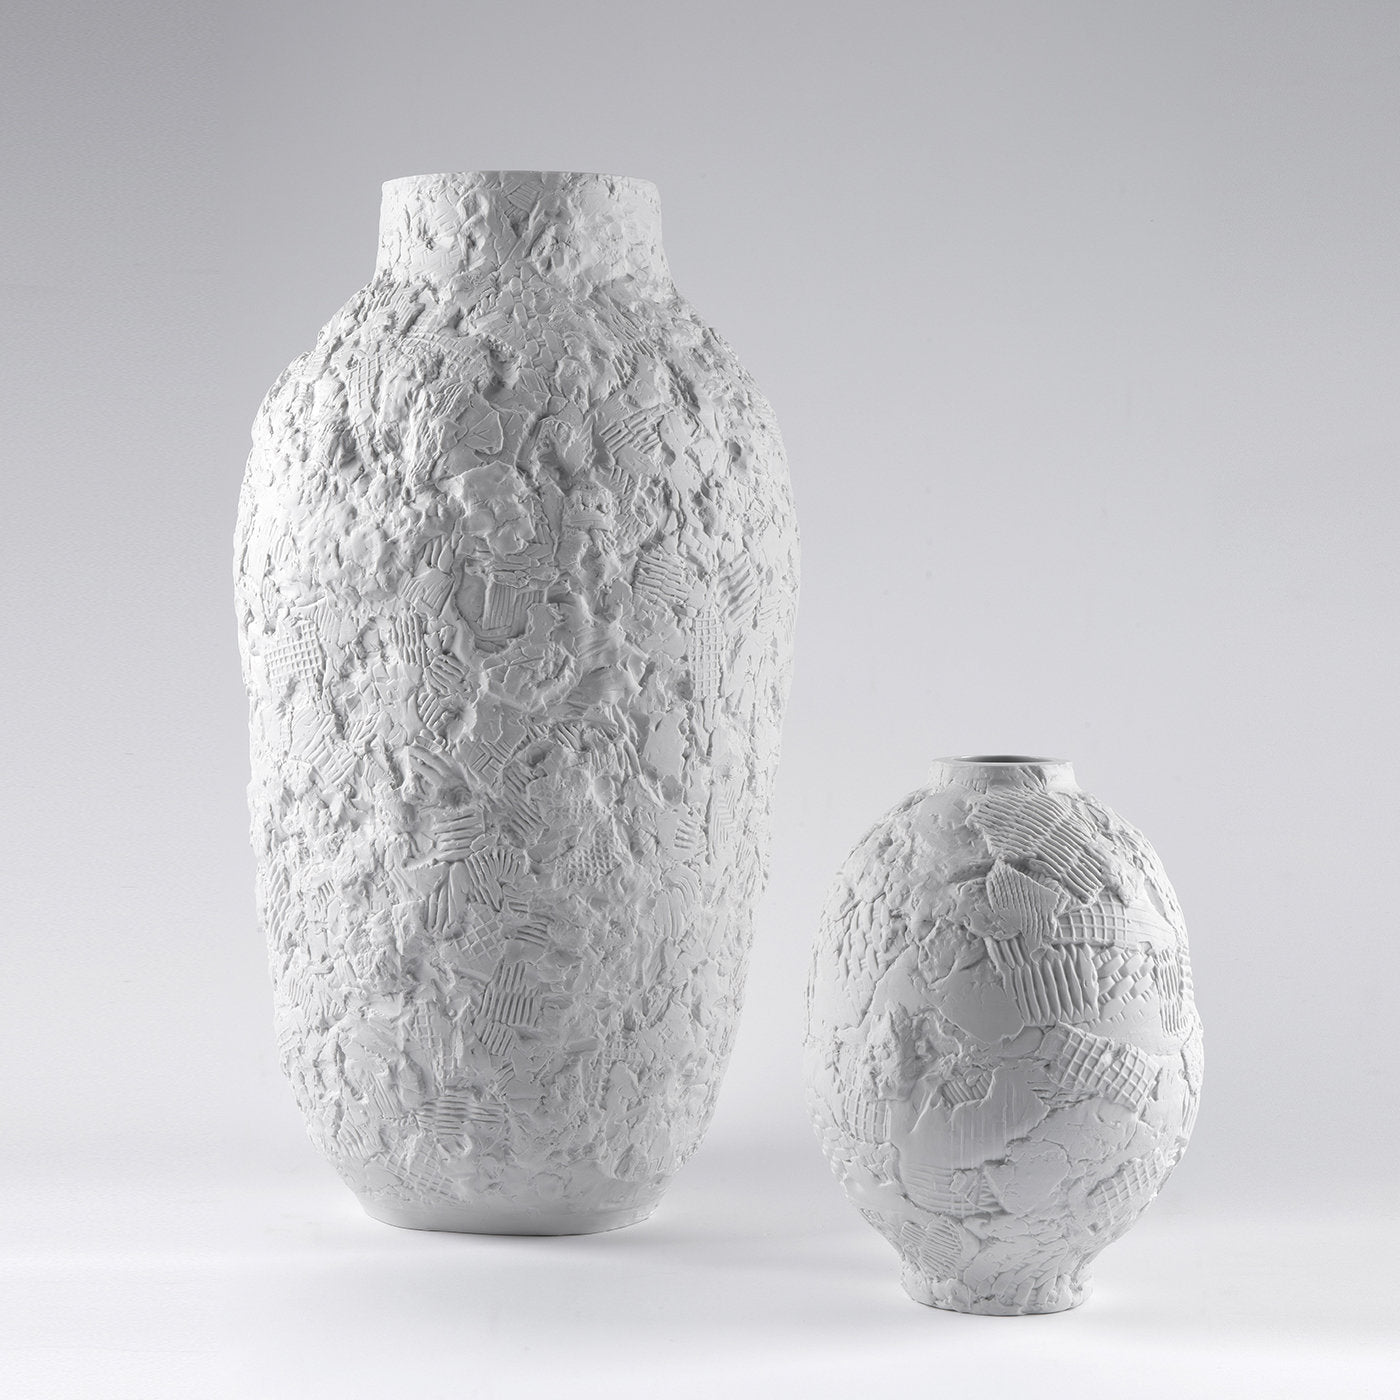 Esker Vase by Pol Polloniato - Alternative view 4